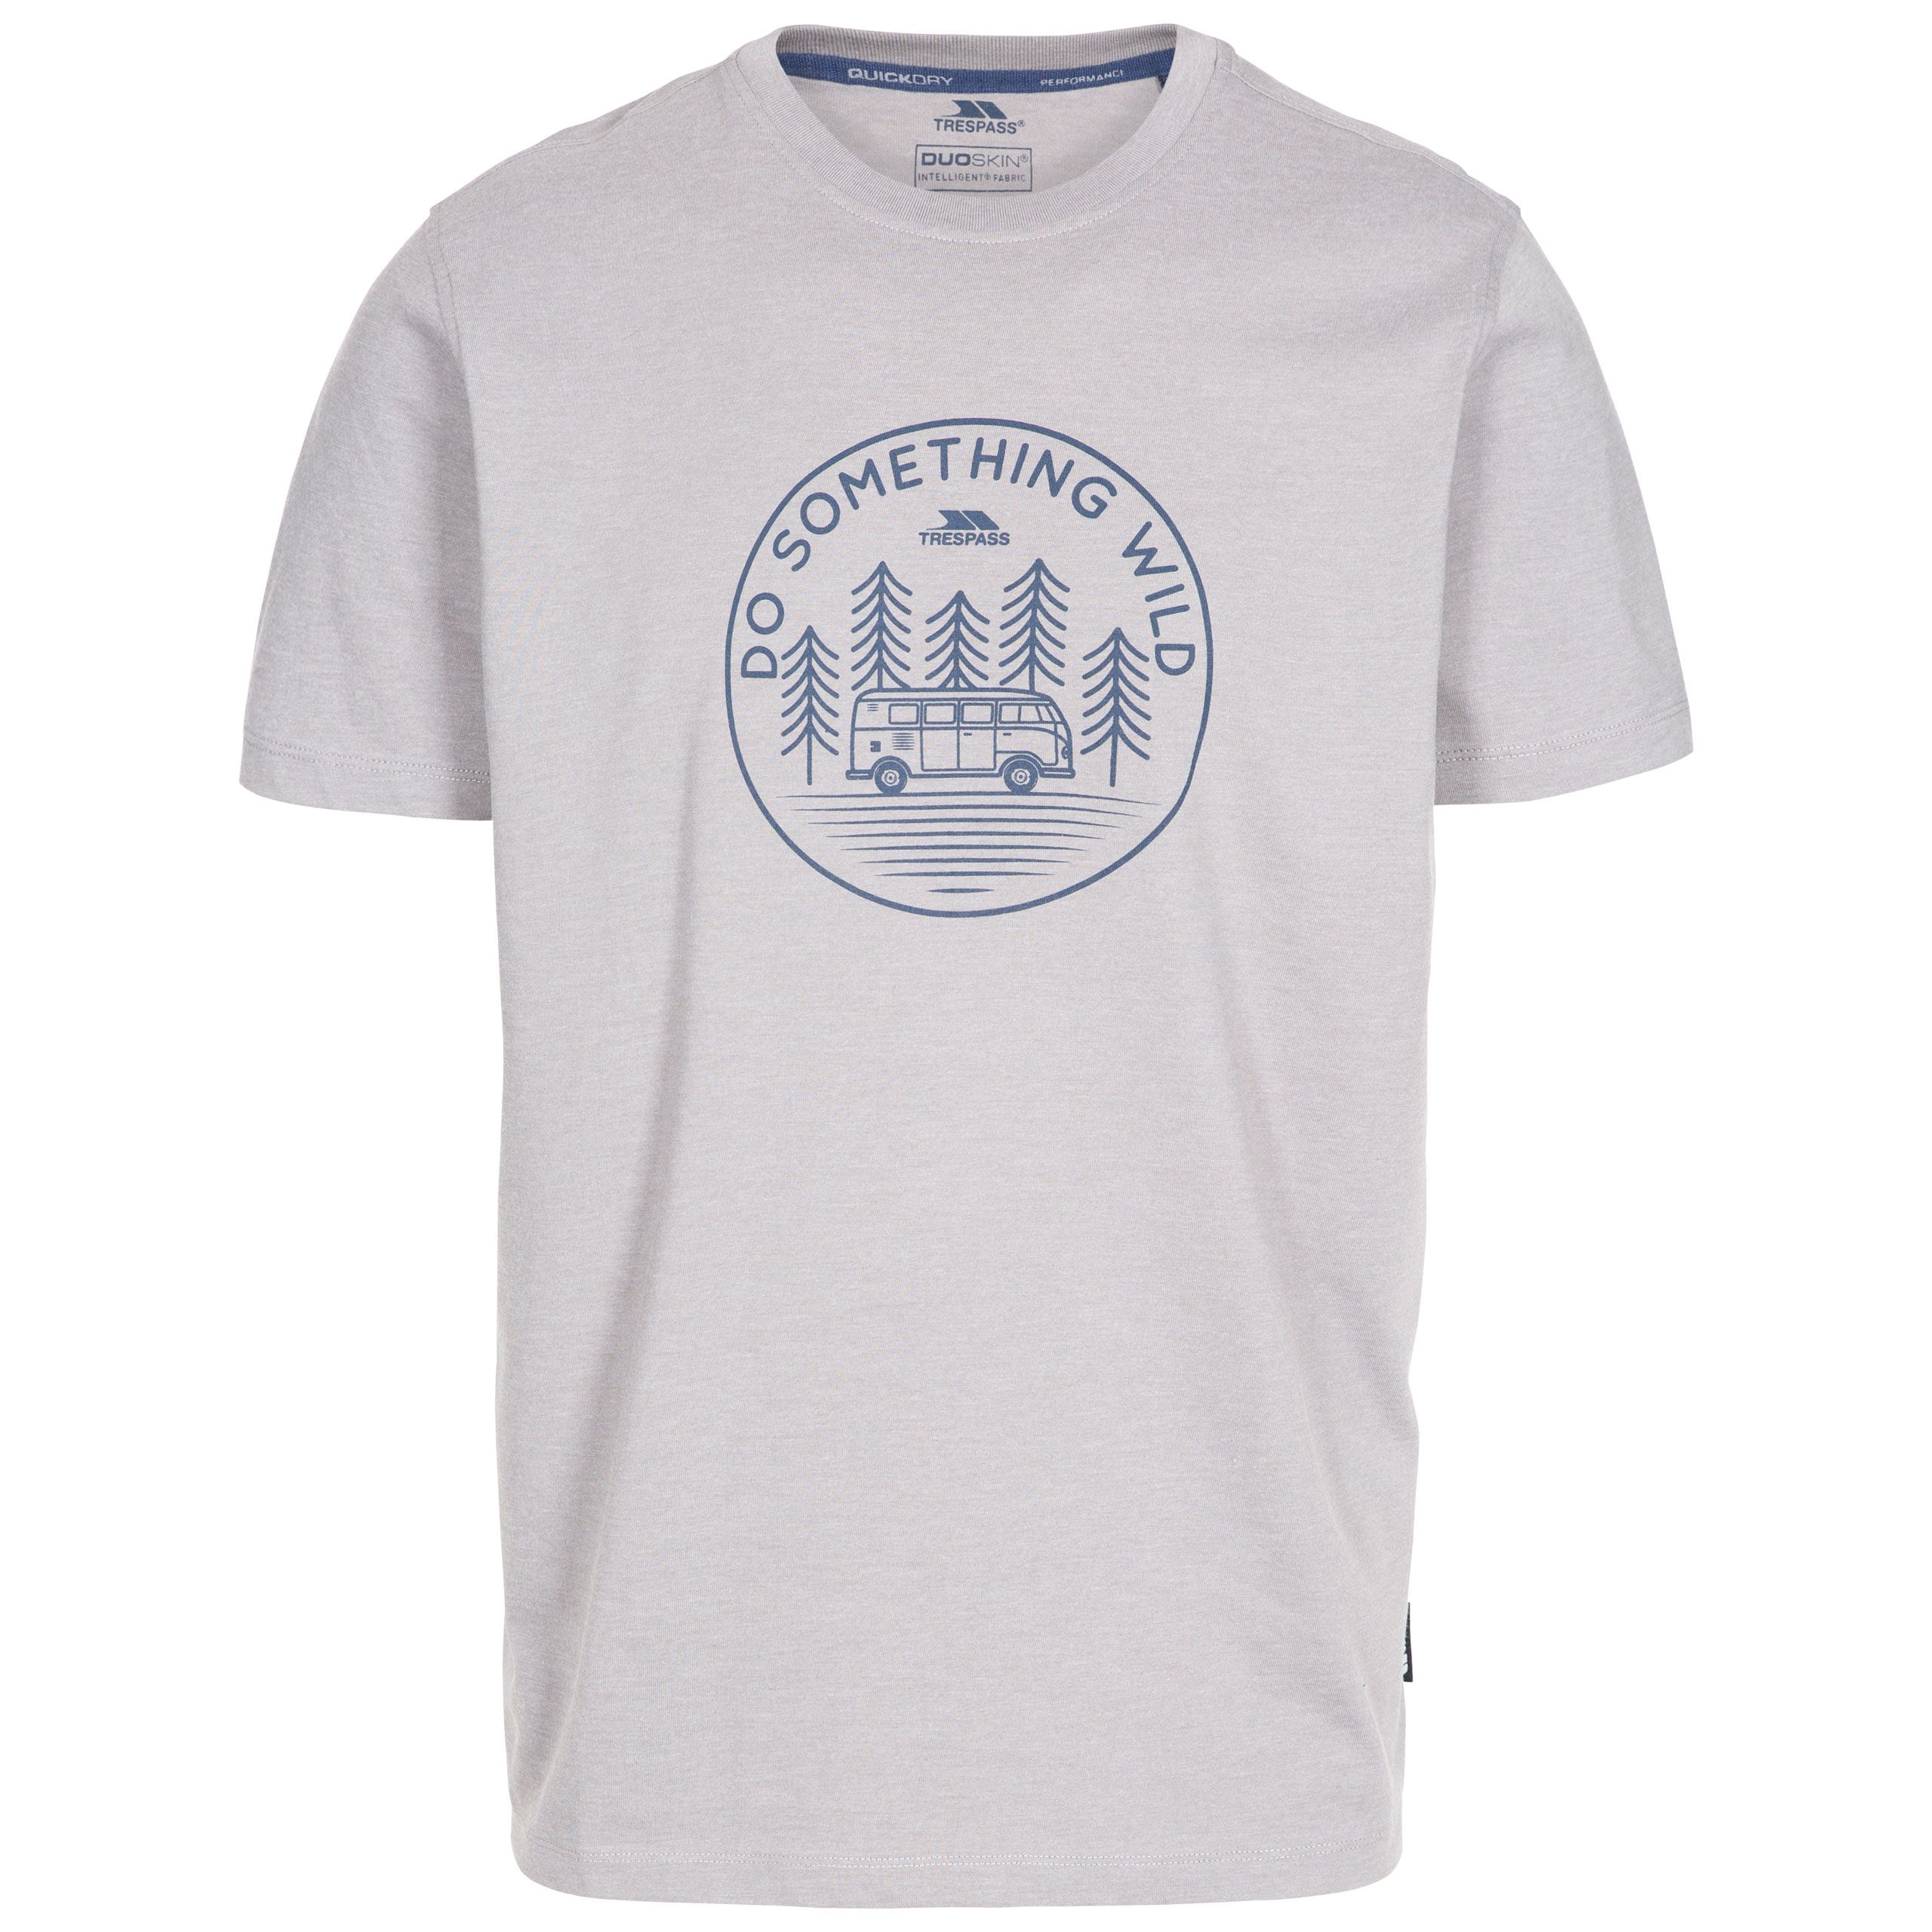 Bothesford Mens Printed T-shirt